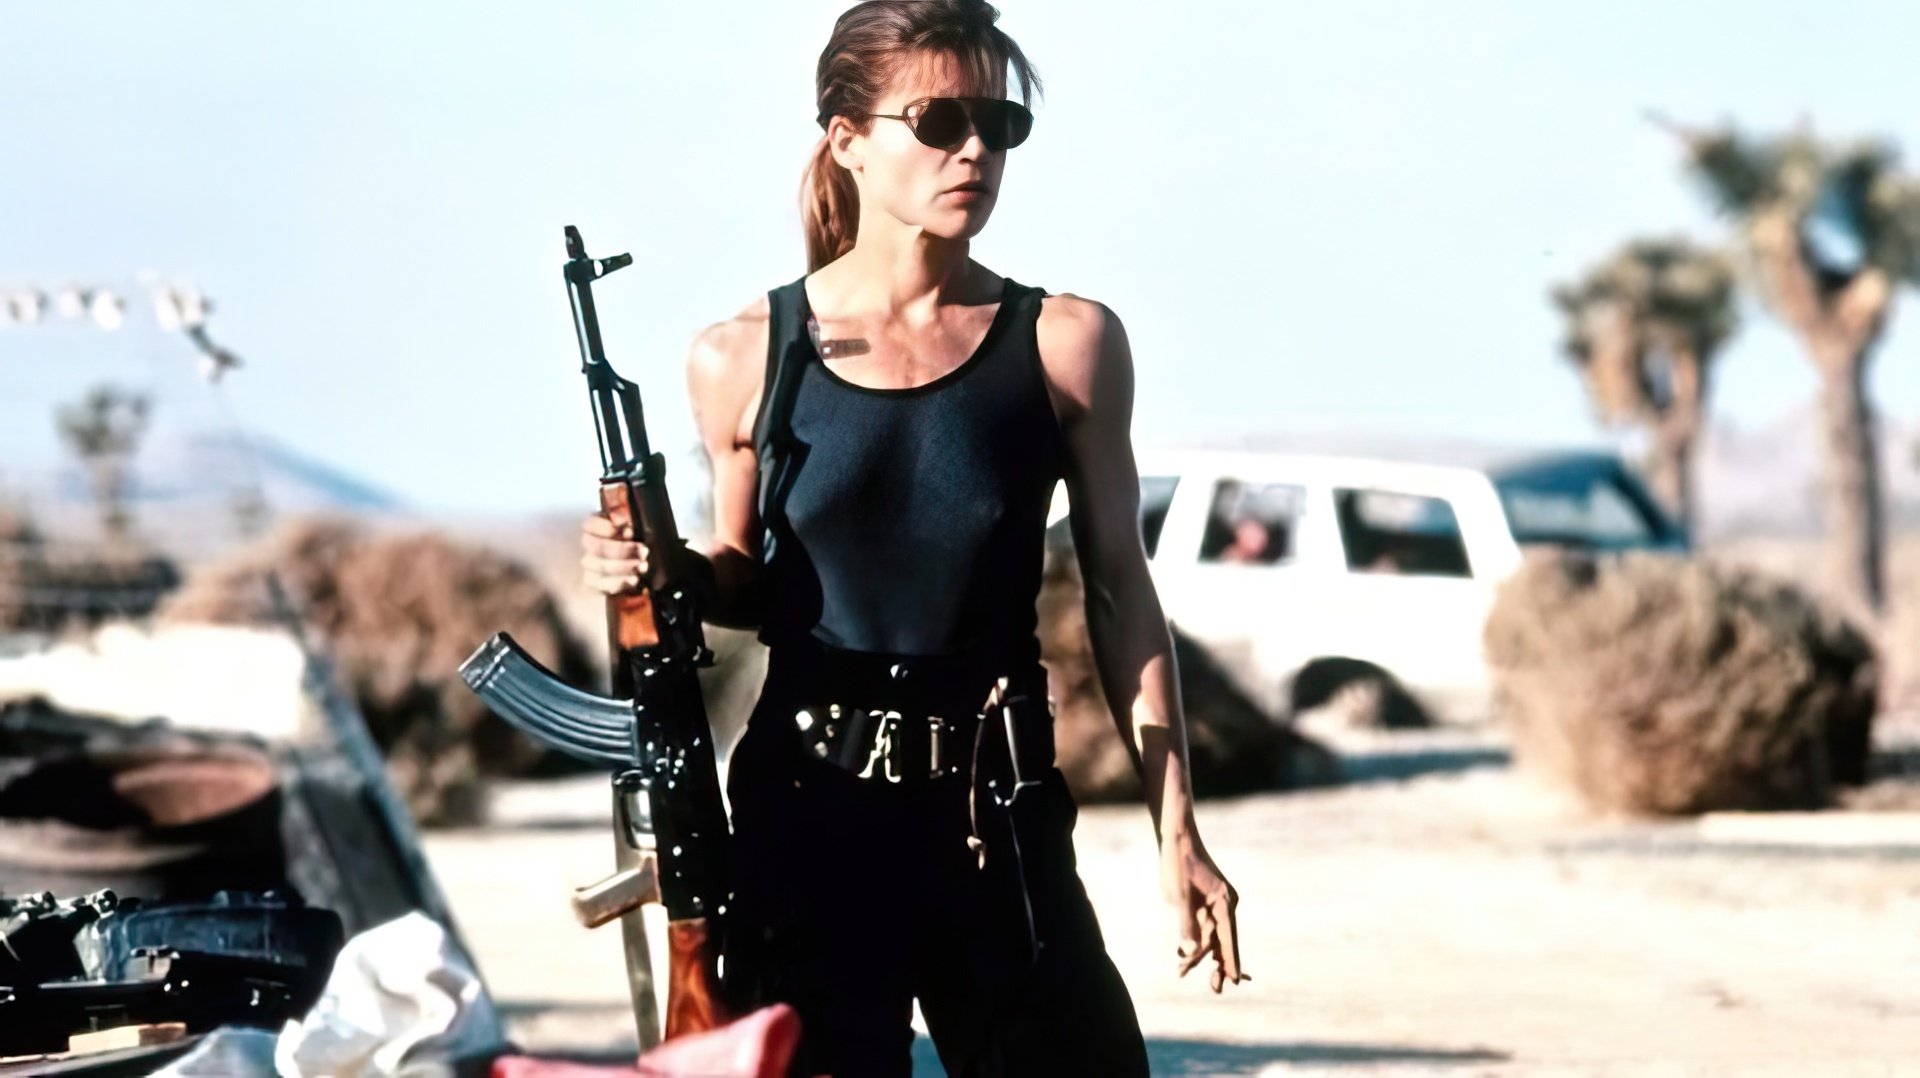 Linda Hamilton as Sarah Connor in The Terminator